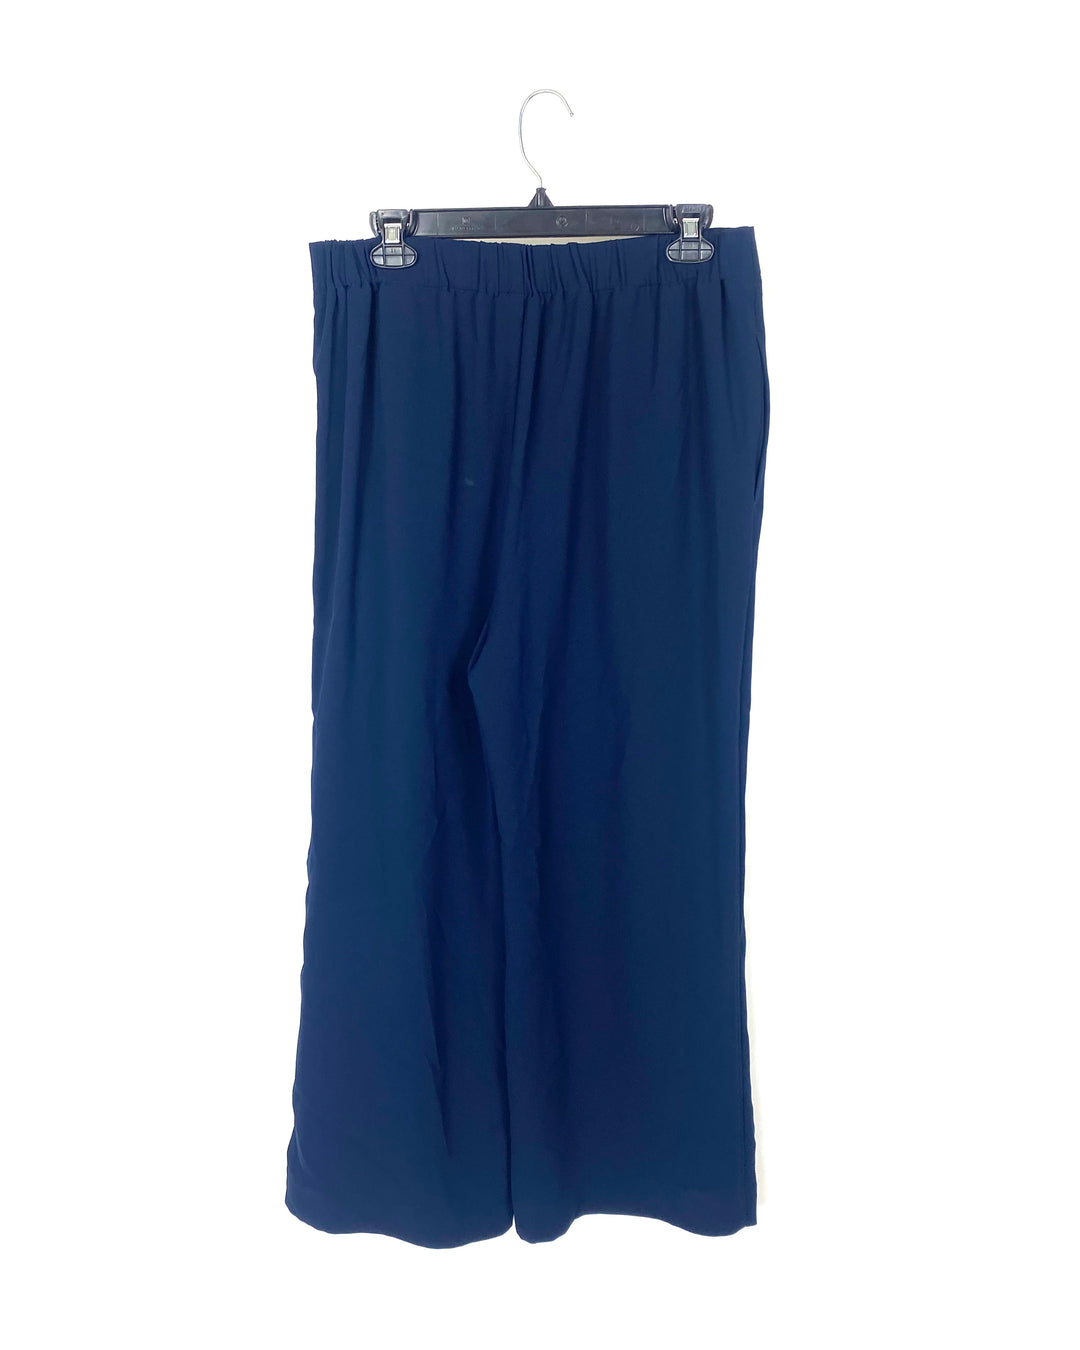 Navy Blue Dress Pants - Size 12